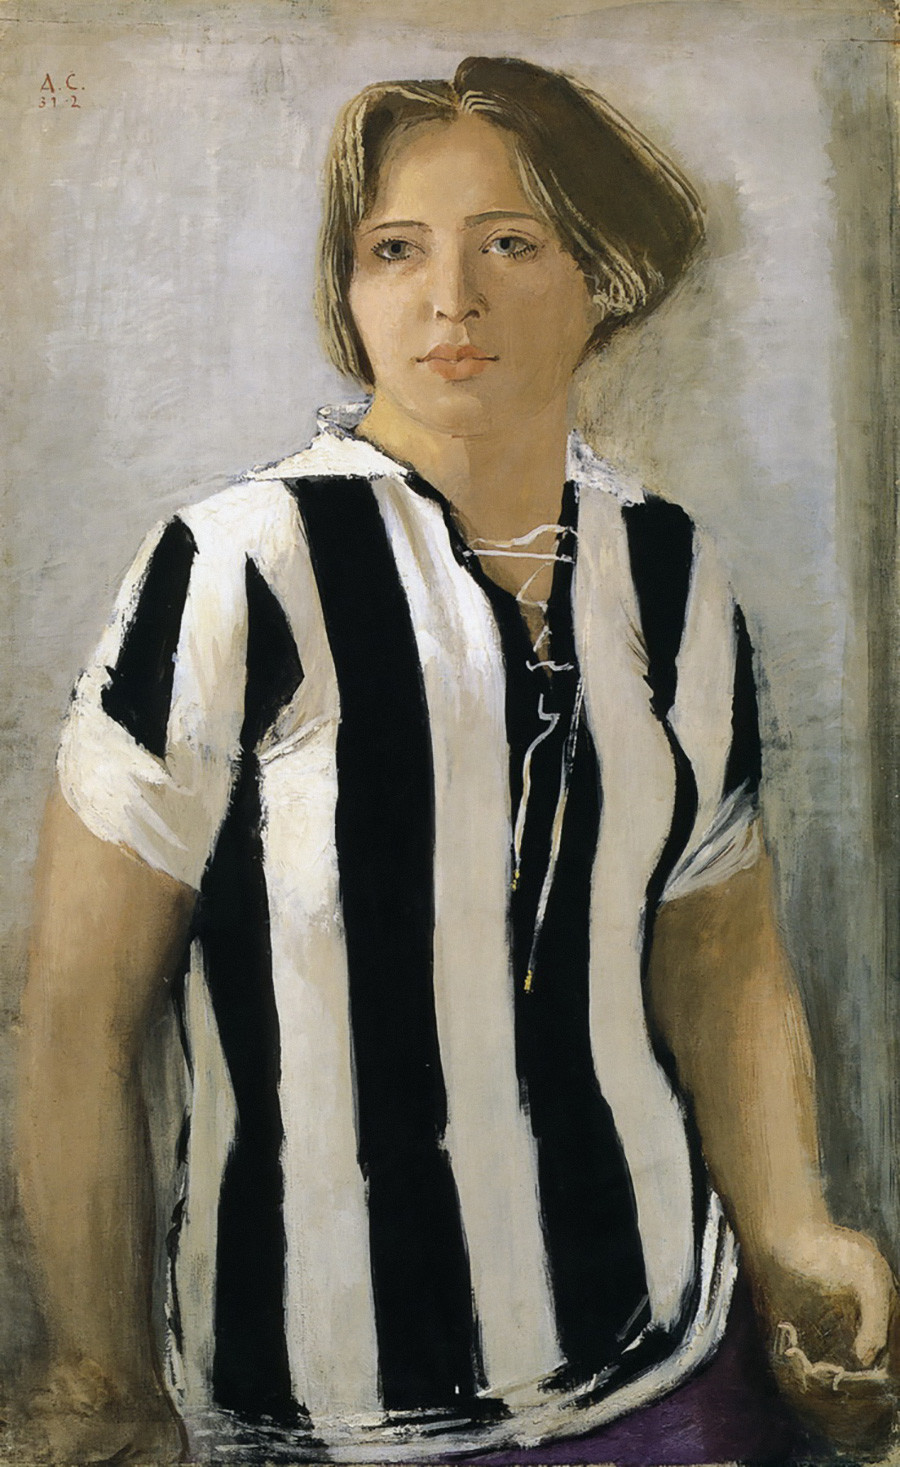 Aleksandr Samokhválov. “Garota com camisa esportiva”, 1932.